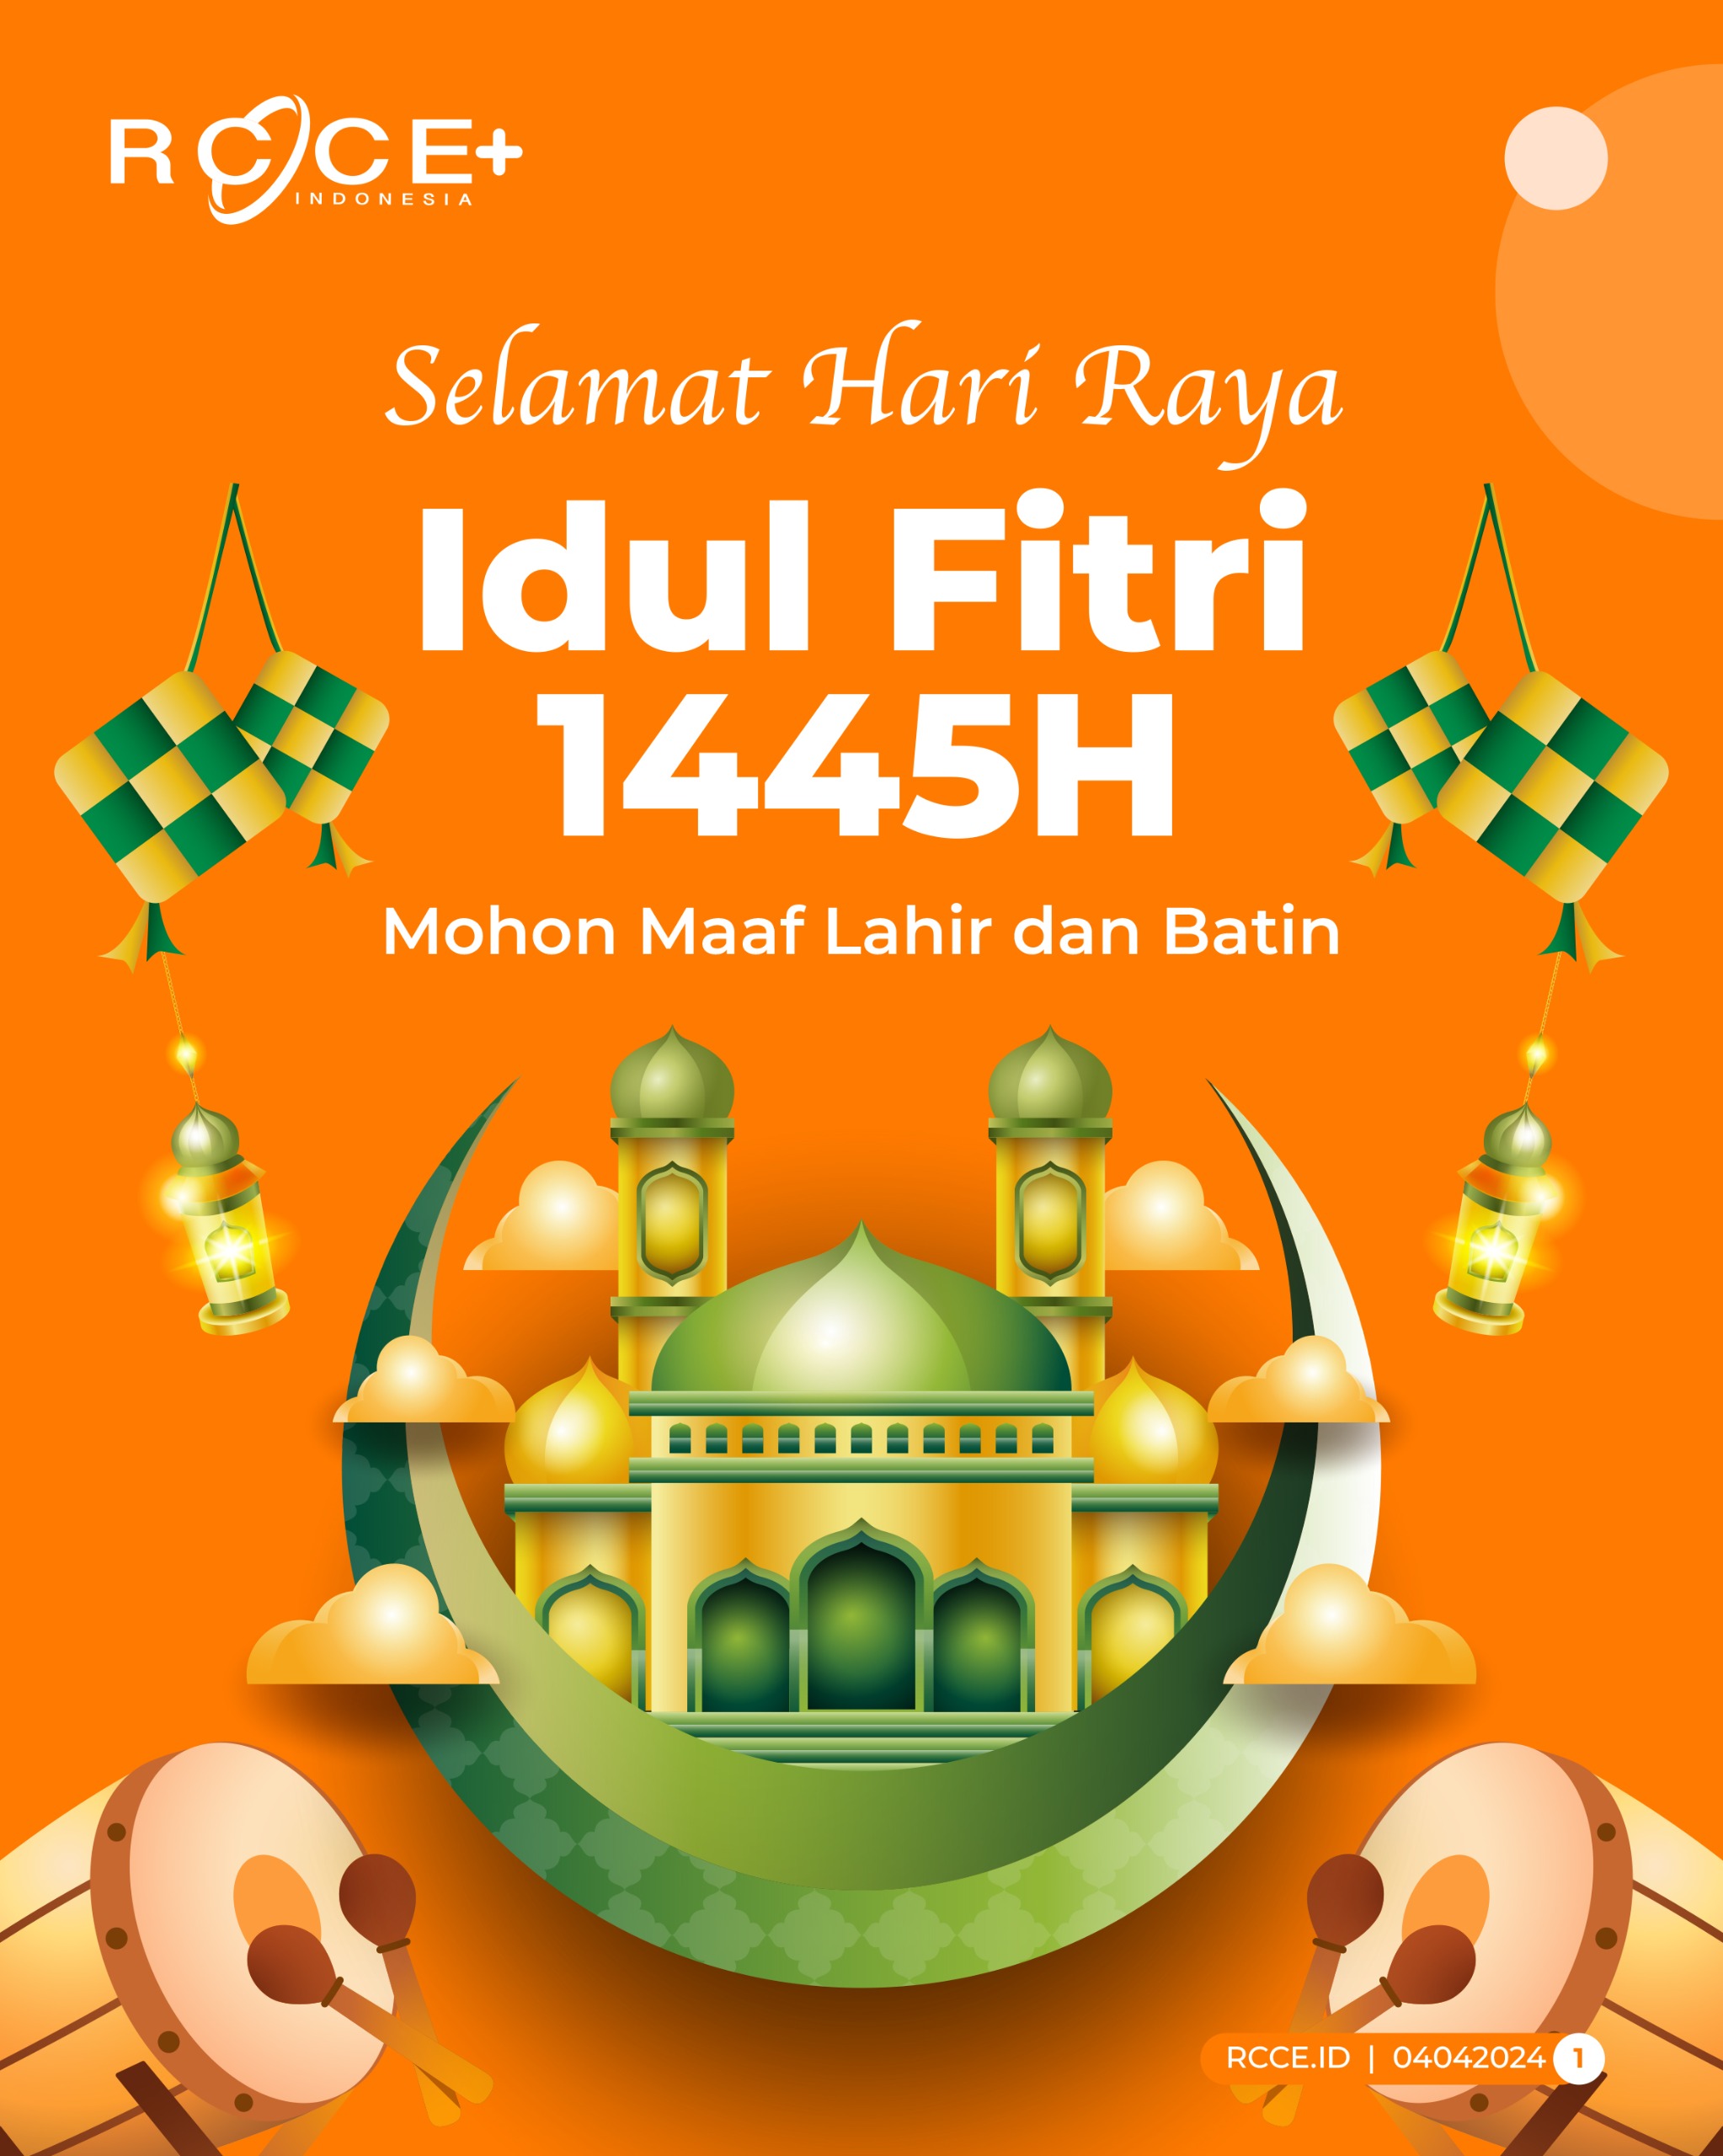 Selamat Idul Fitri 1445H